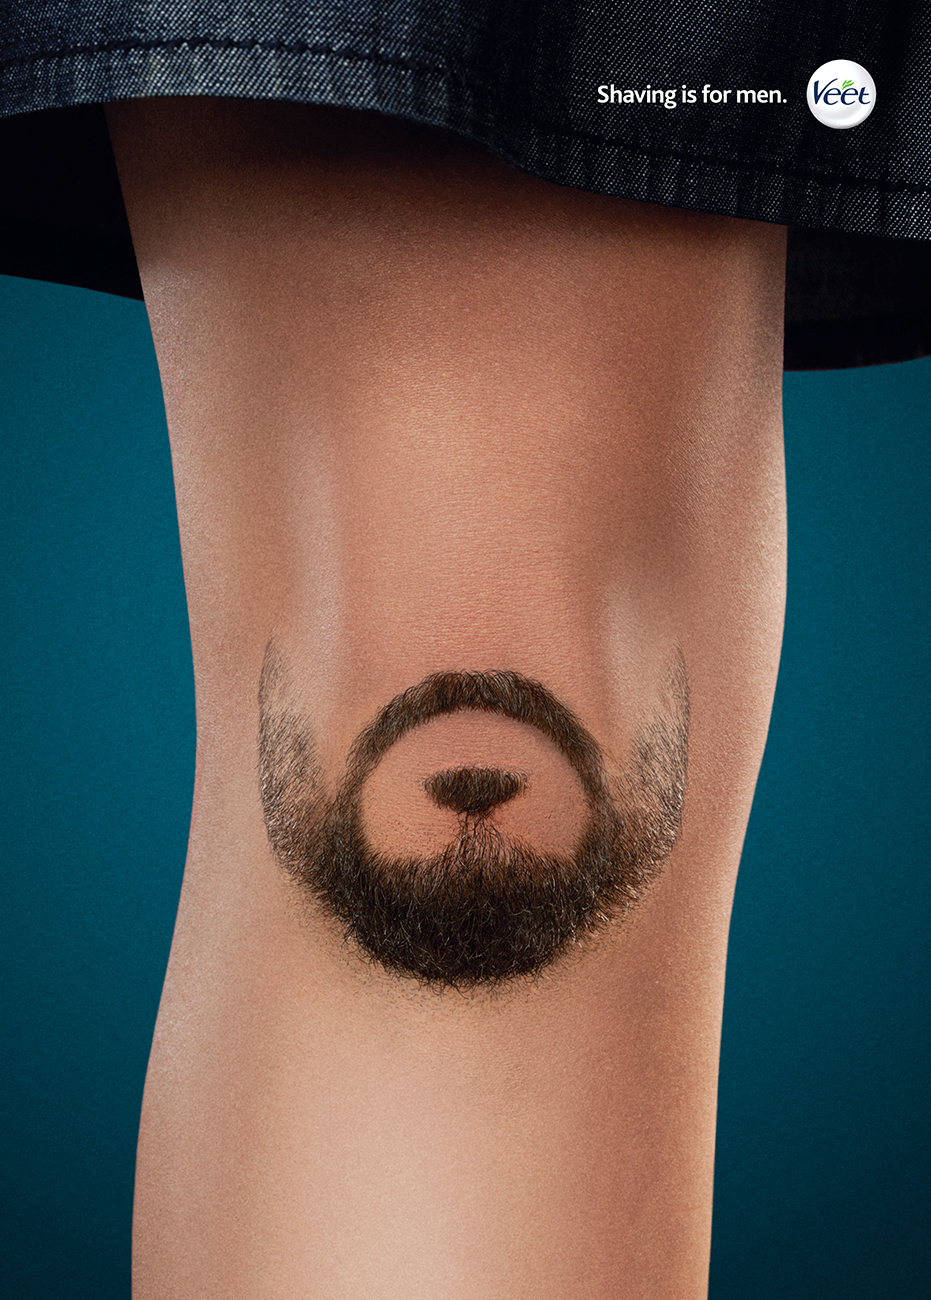 veet beard knee Advertisign concept idea retouch